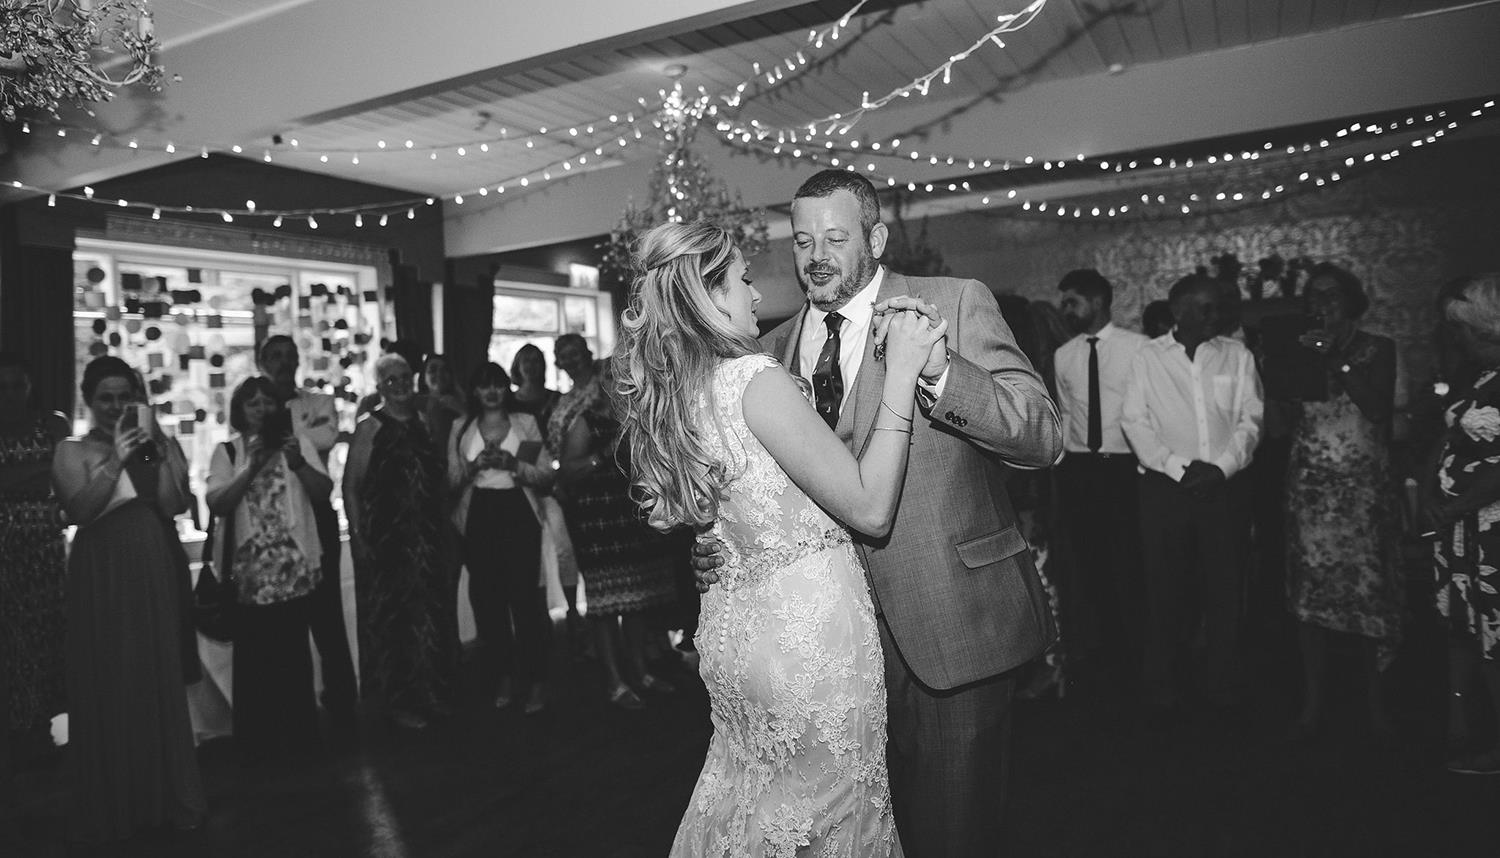 Dancing. Photo Credit: Nicola Casey Photography